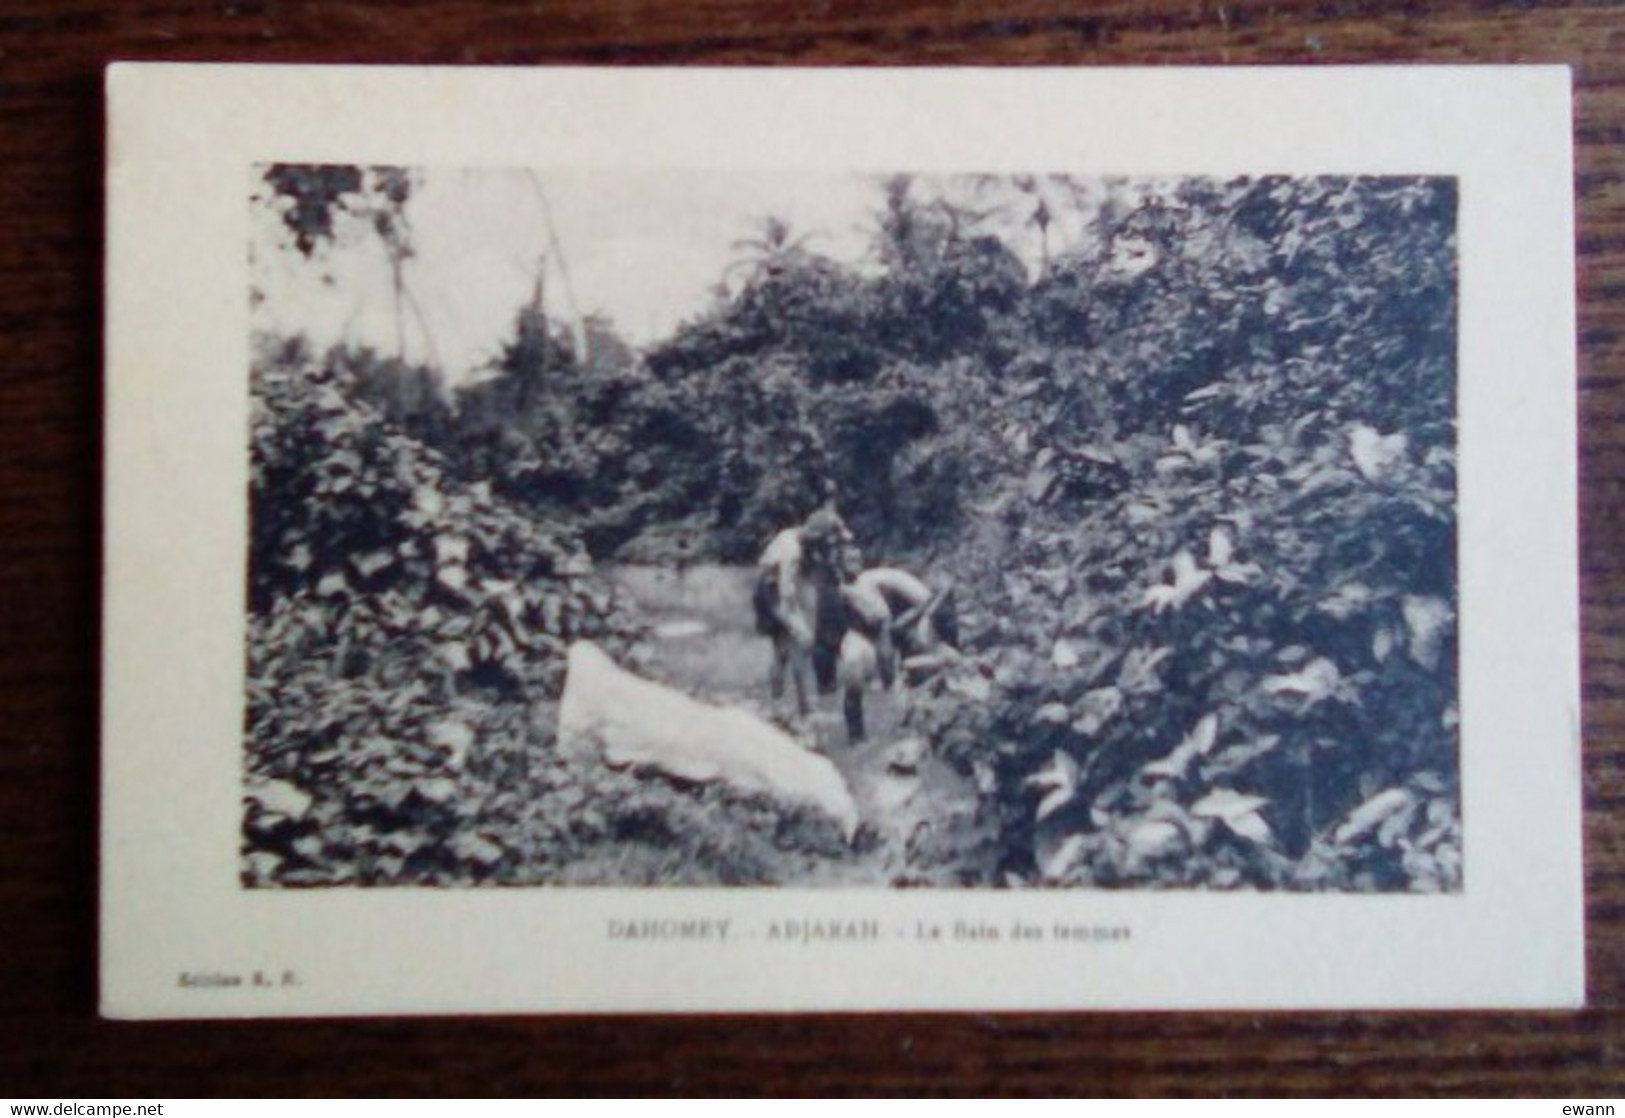 Dahomey - Carte Postale Ancienne -  Adjarah- Le Bain Des Femmes - Dahomey